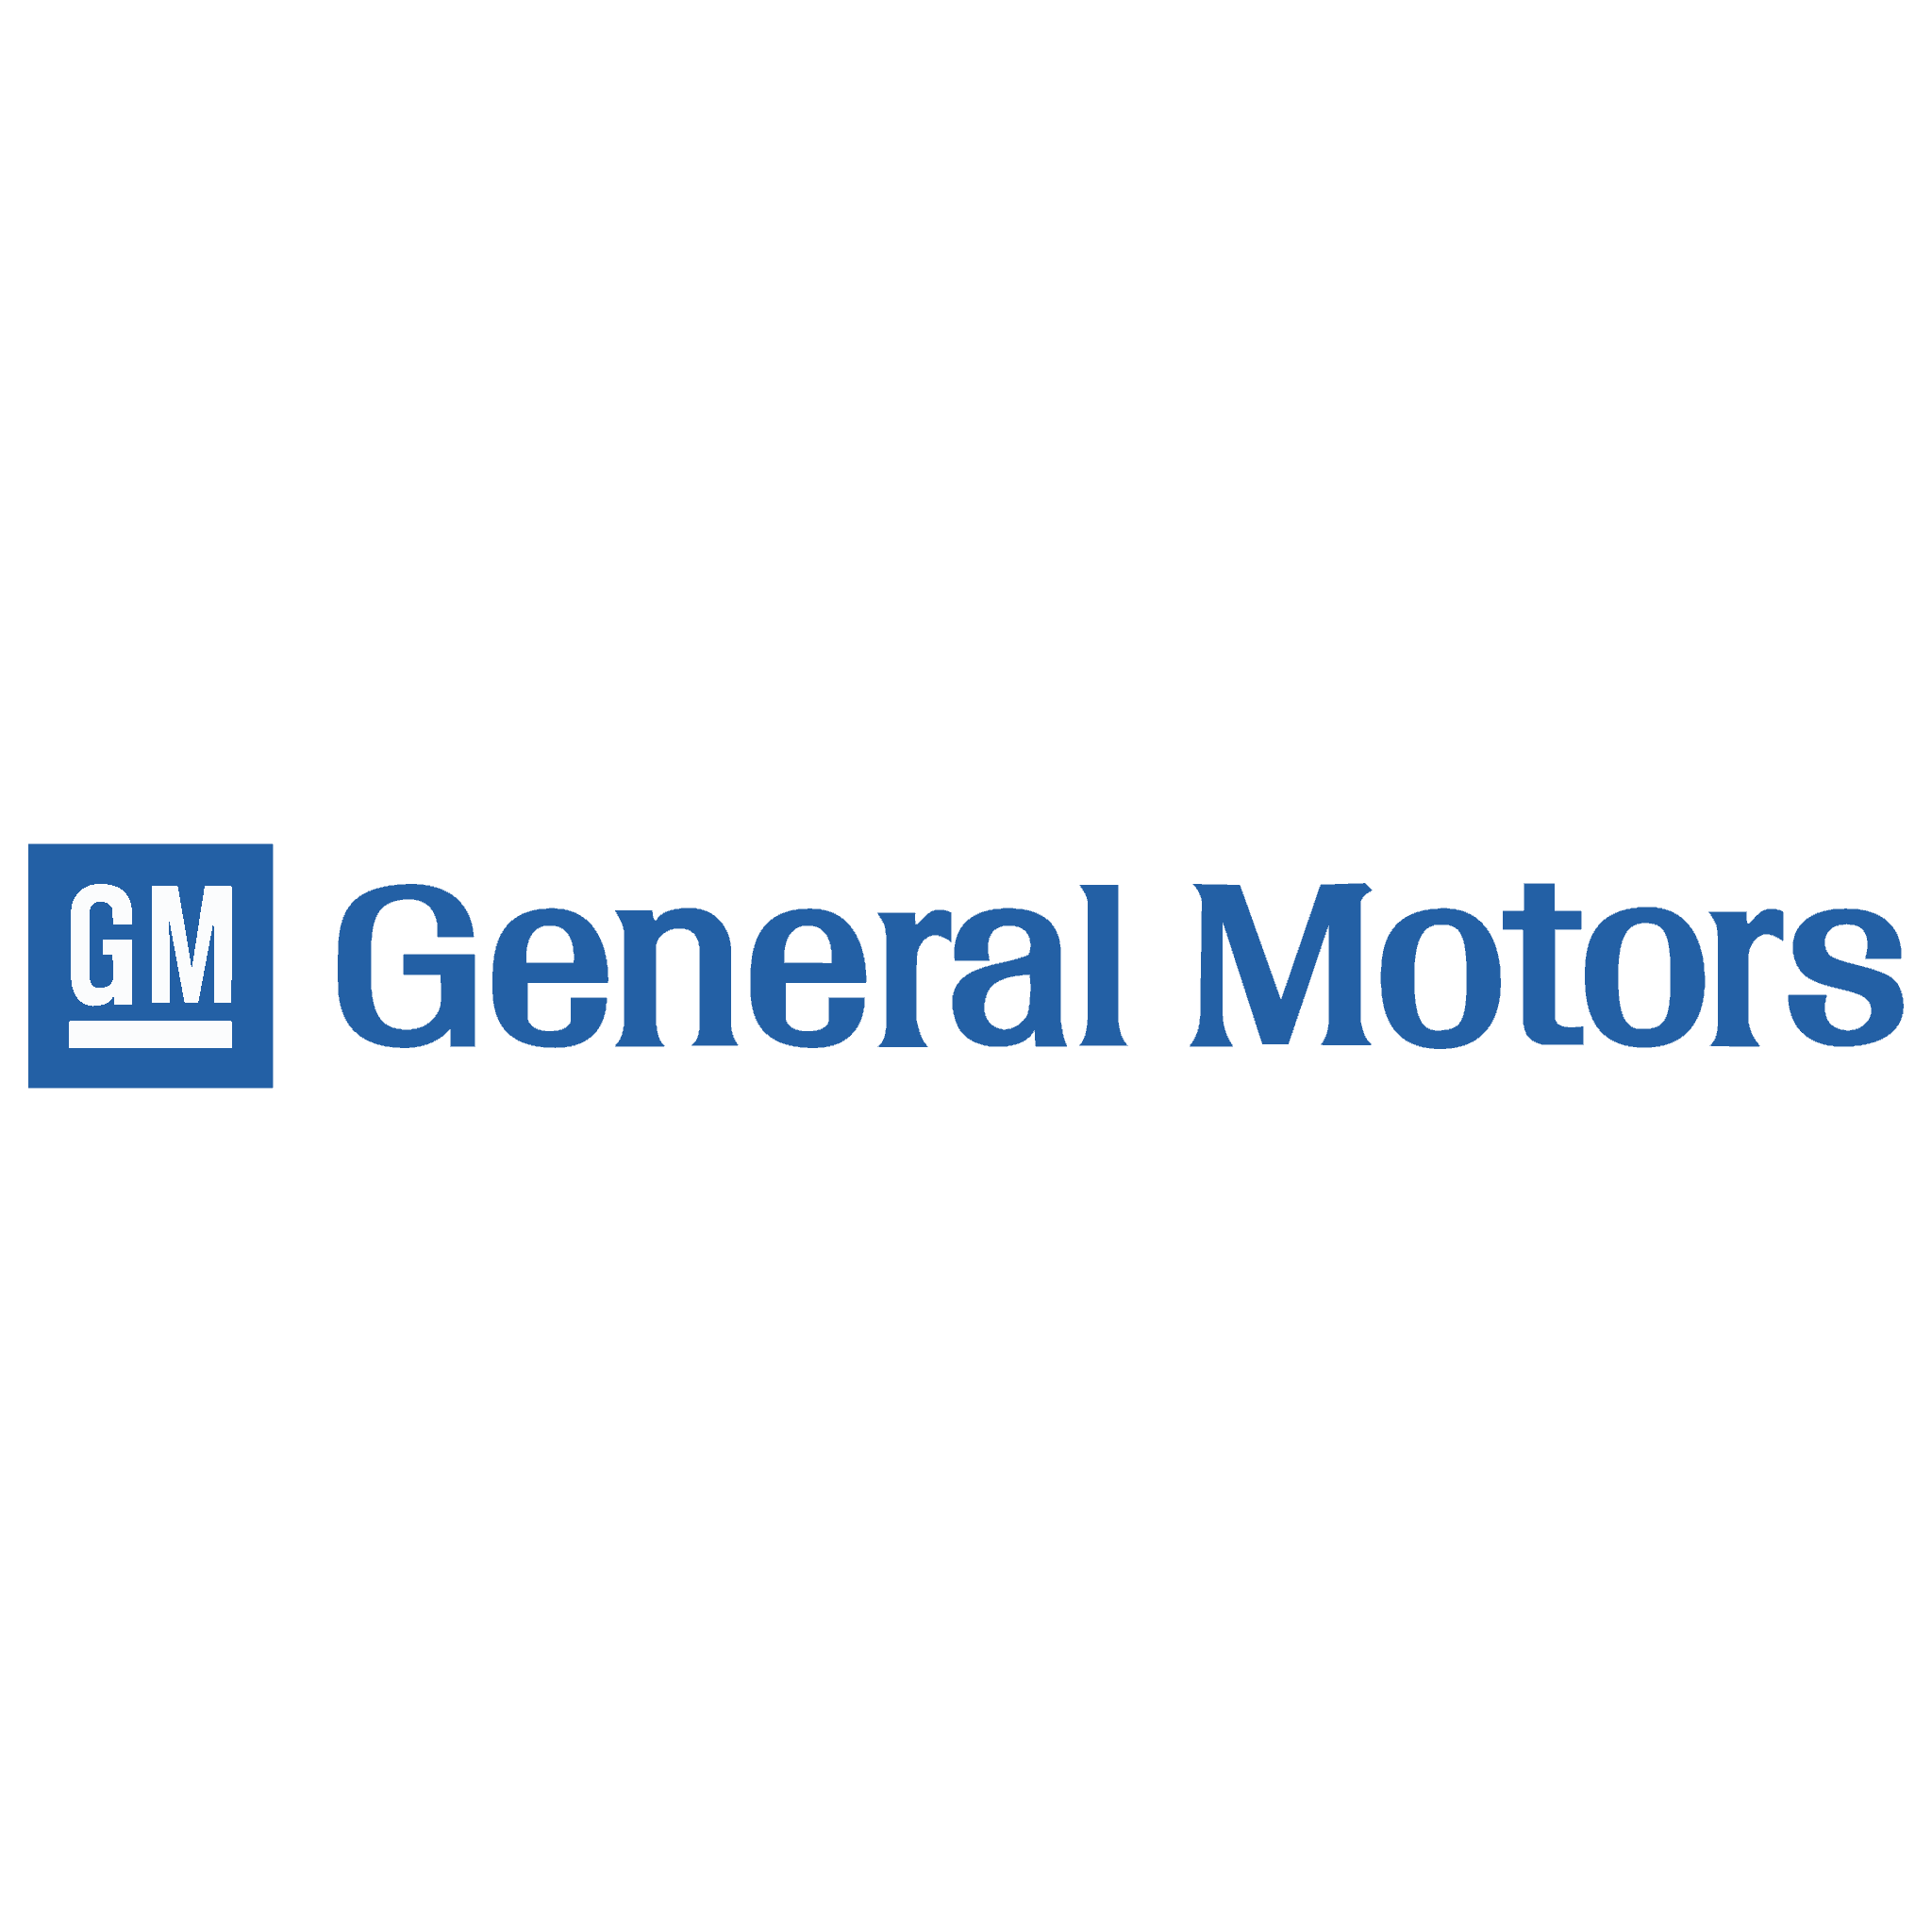 General Motors Wave Analysis – 12 February, 2020